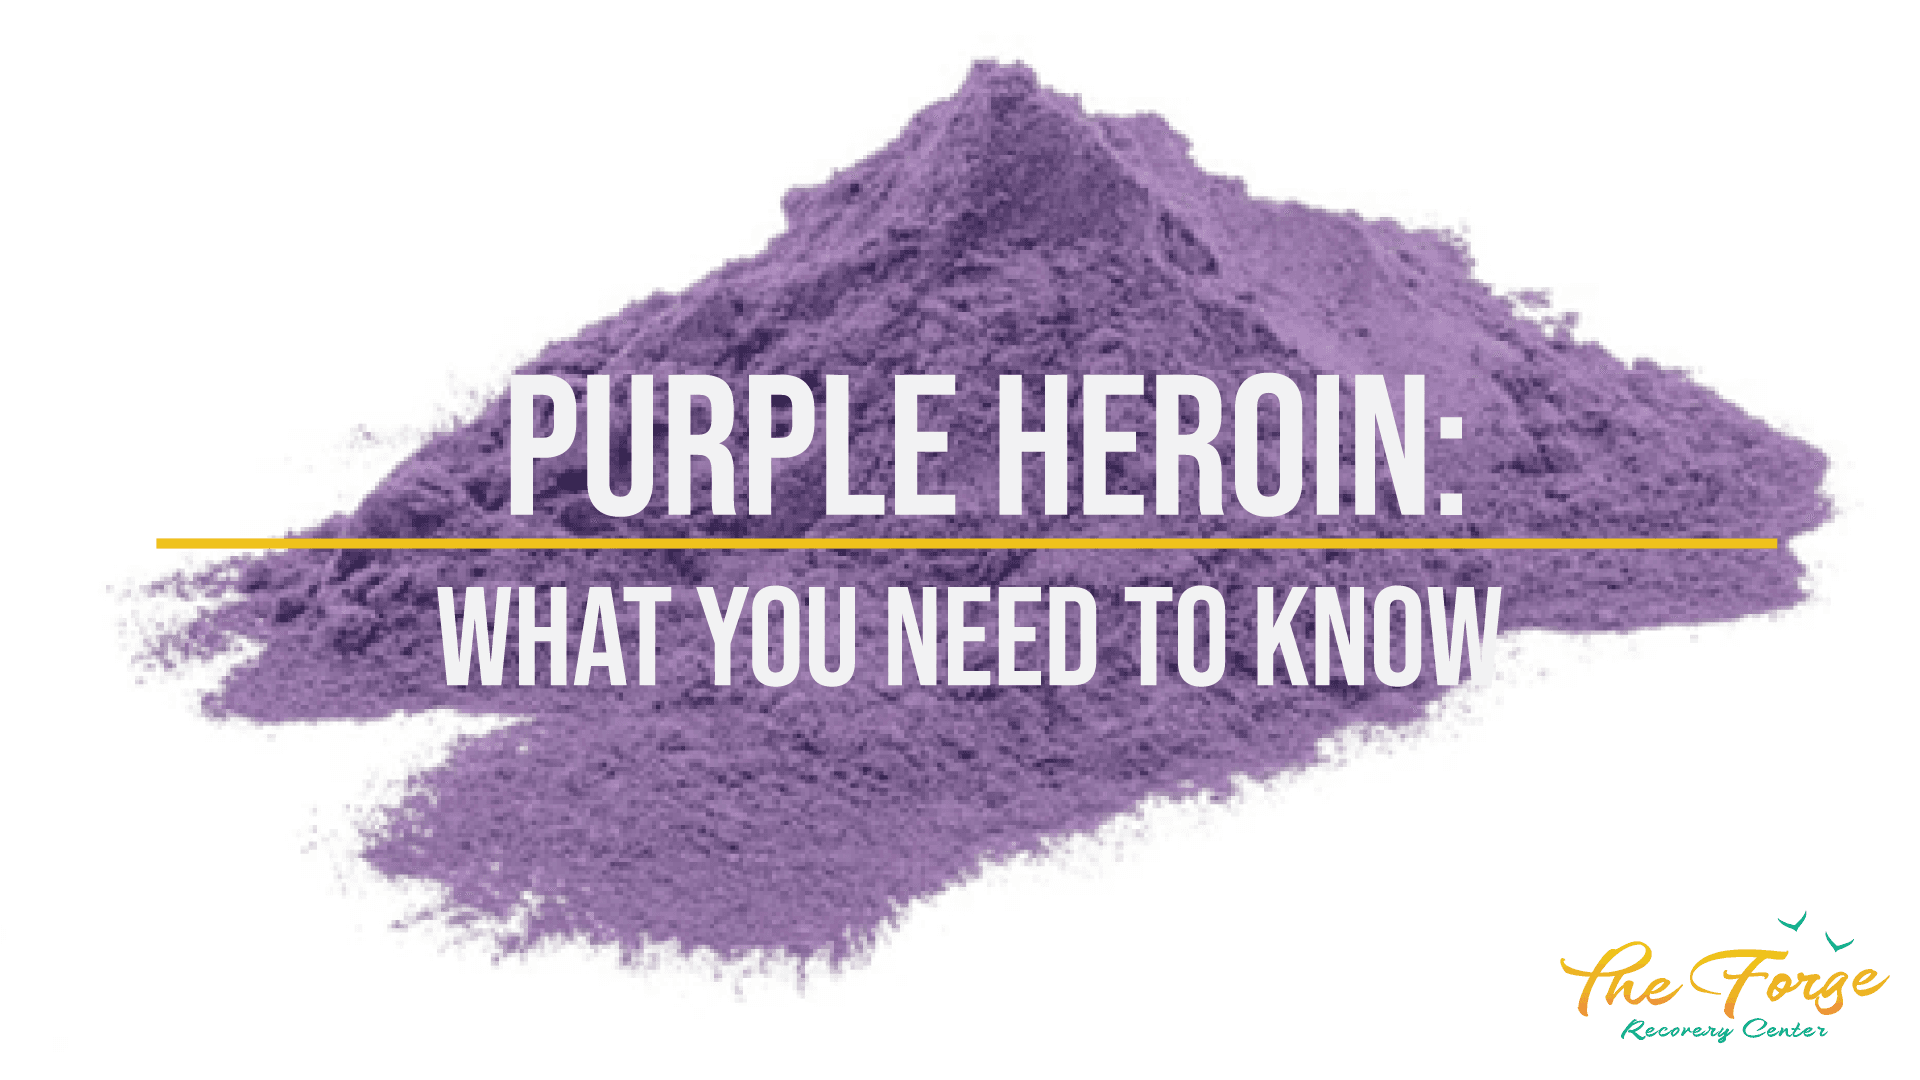 What is Purple Heroin?